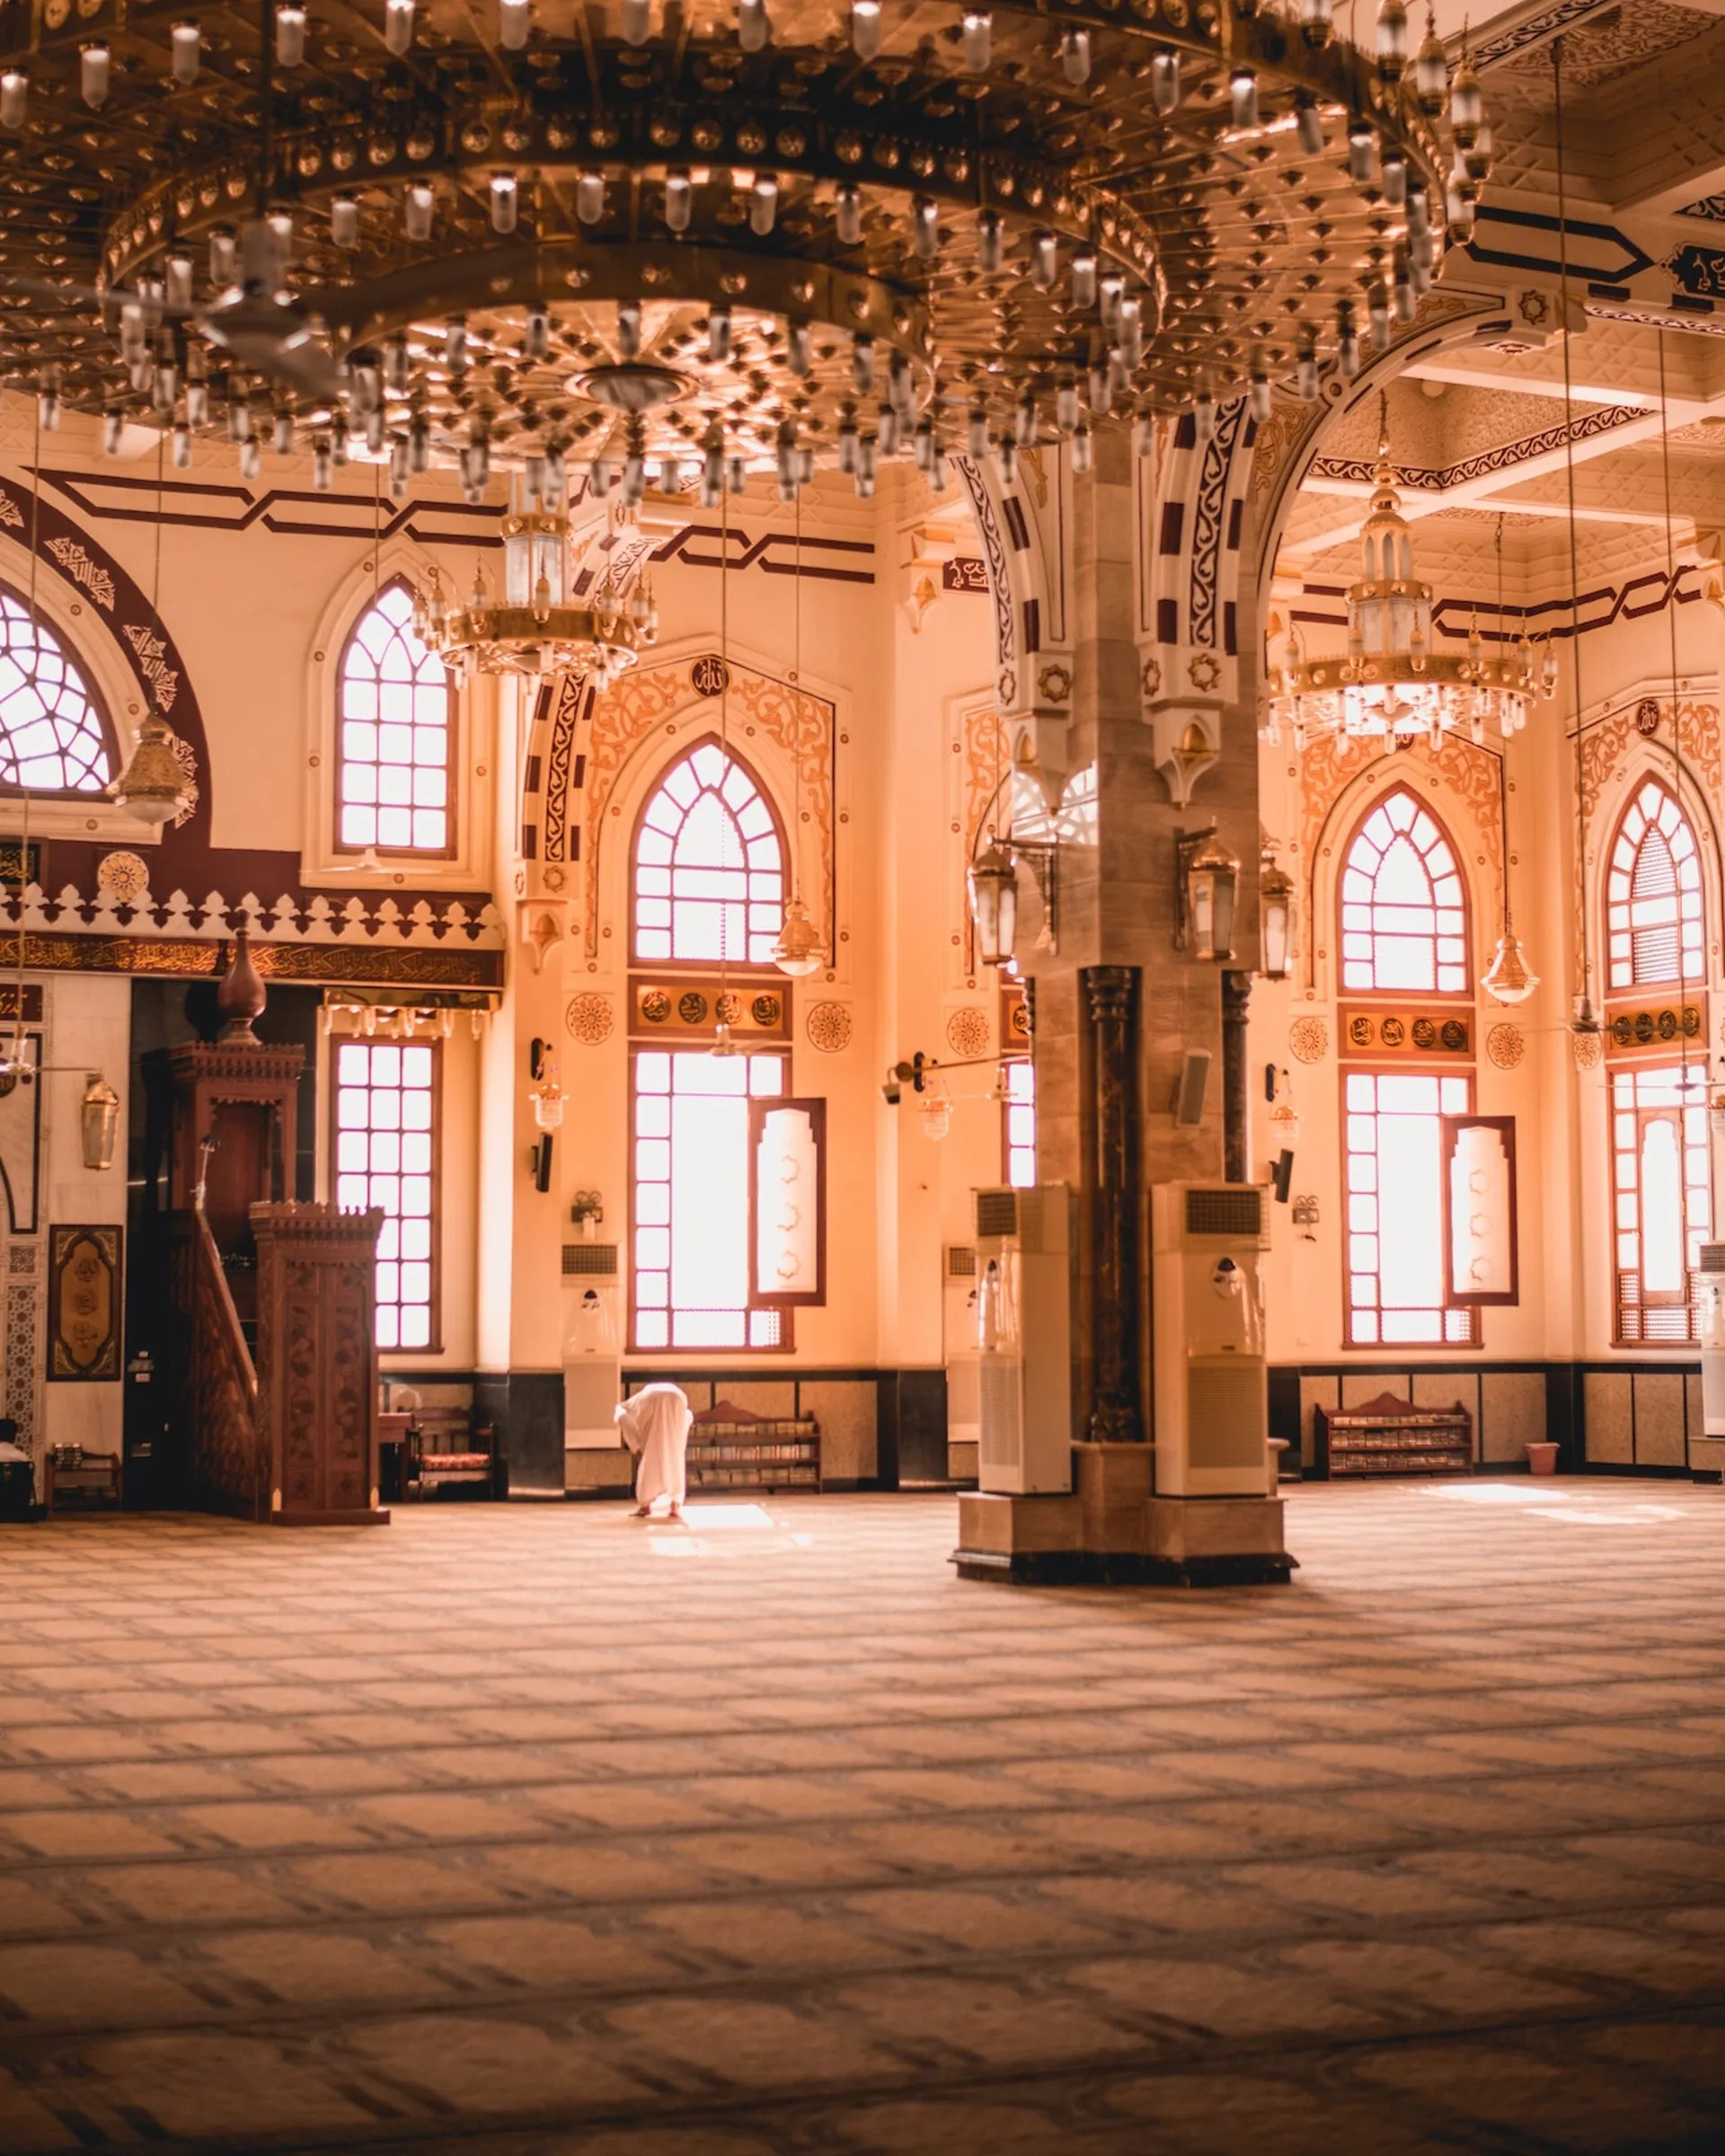 Abu Mas'uod Al Ansari Mosque